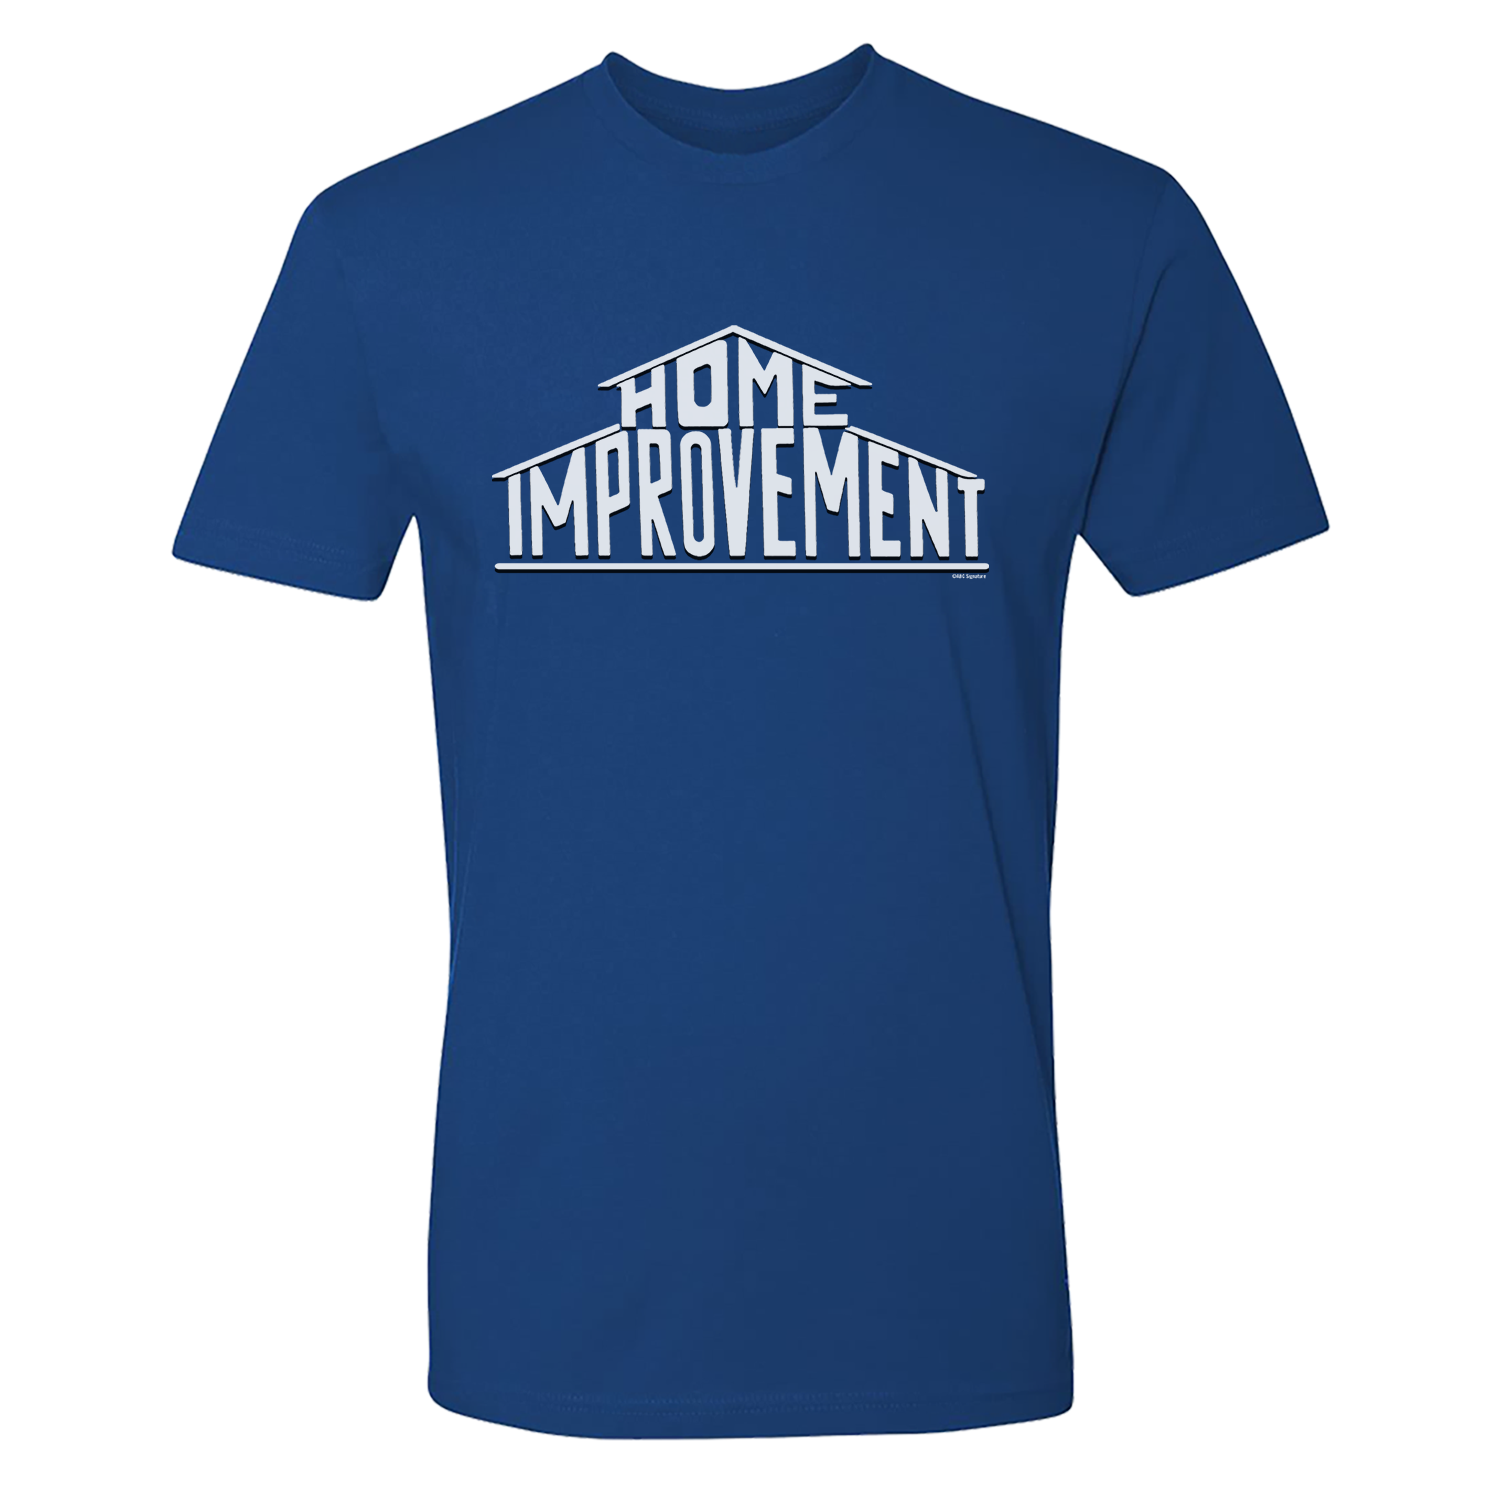 Free home improvement merchandise